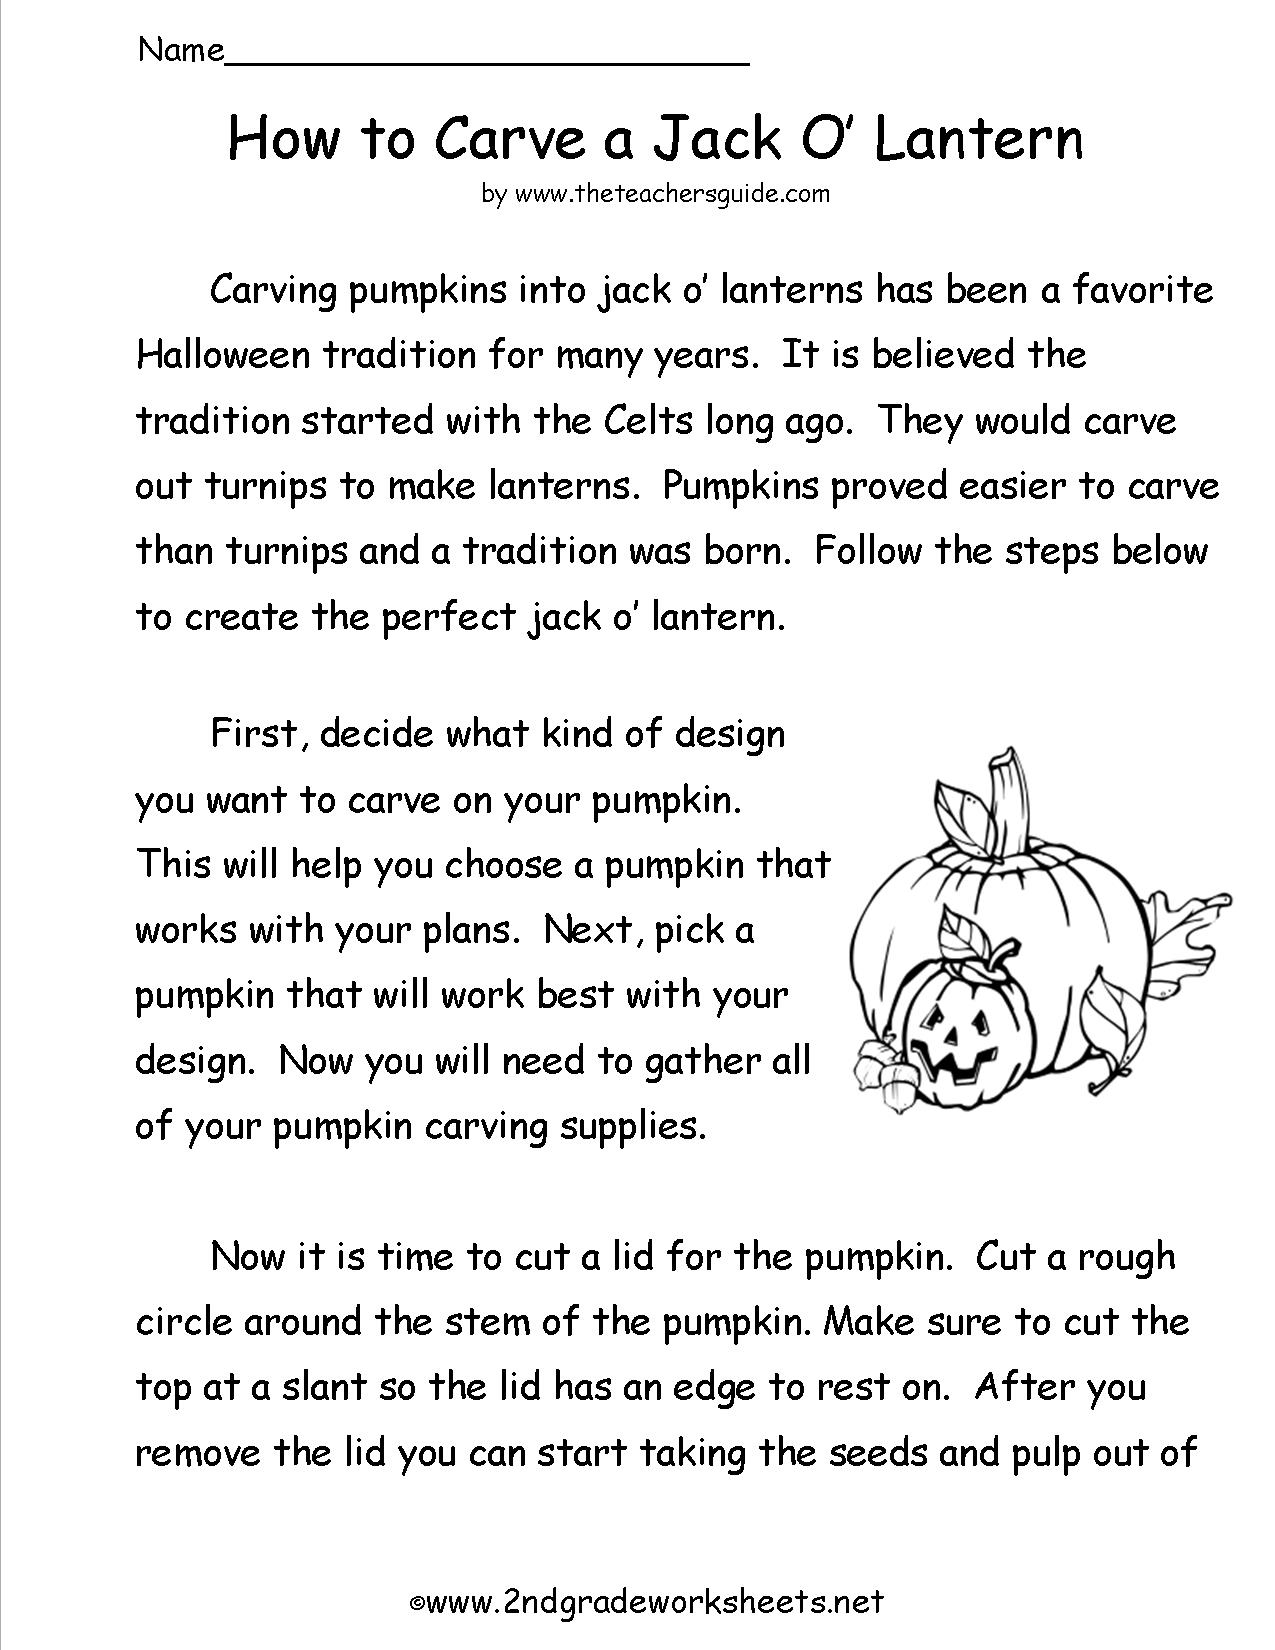 2nd Grade Halloween Worksheets The Best Worksheets Image